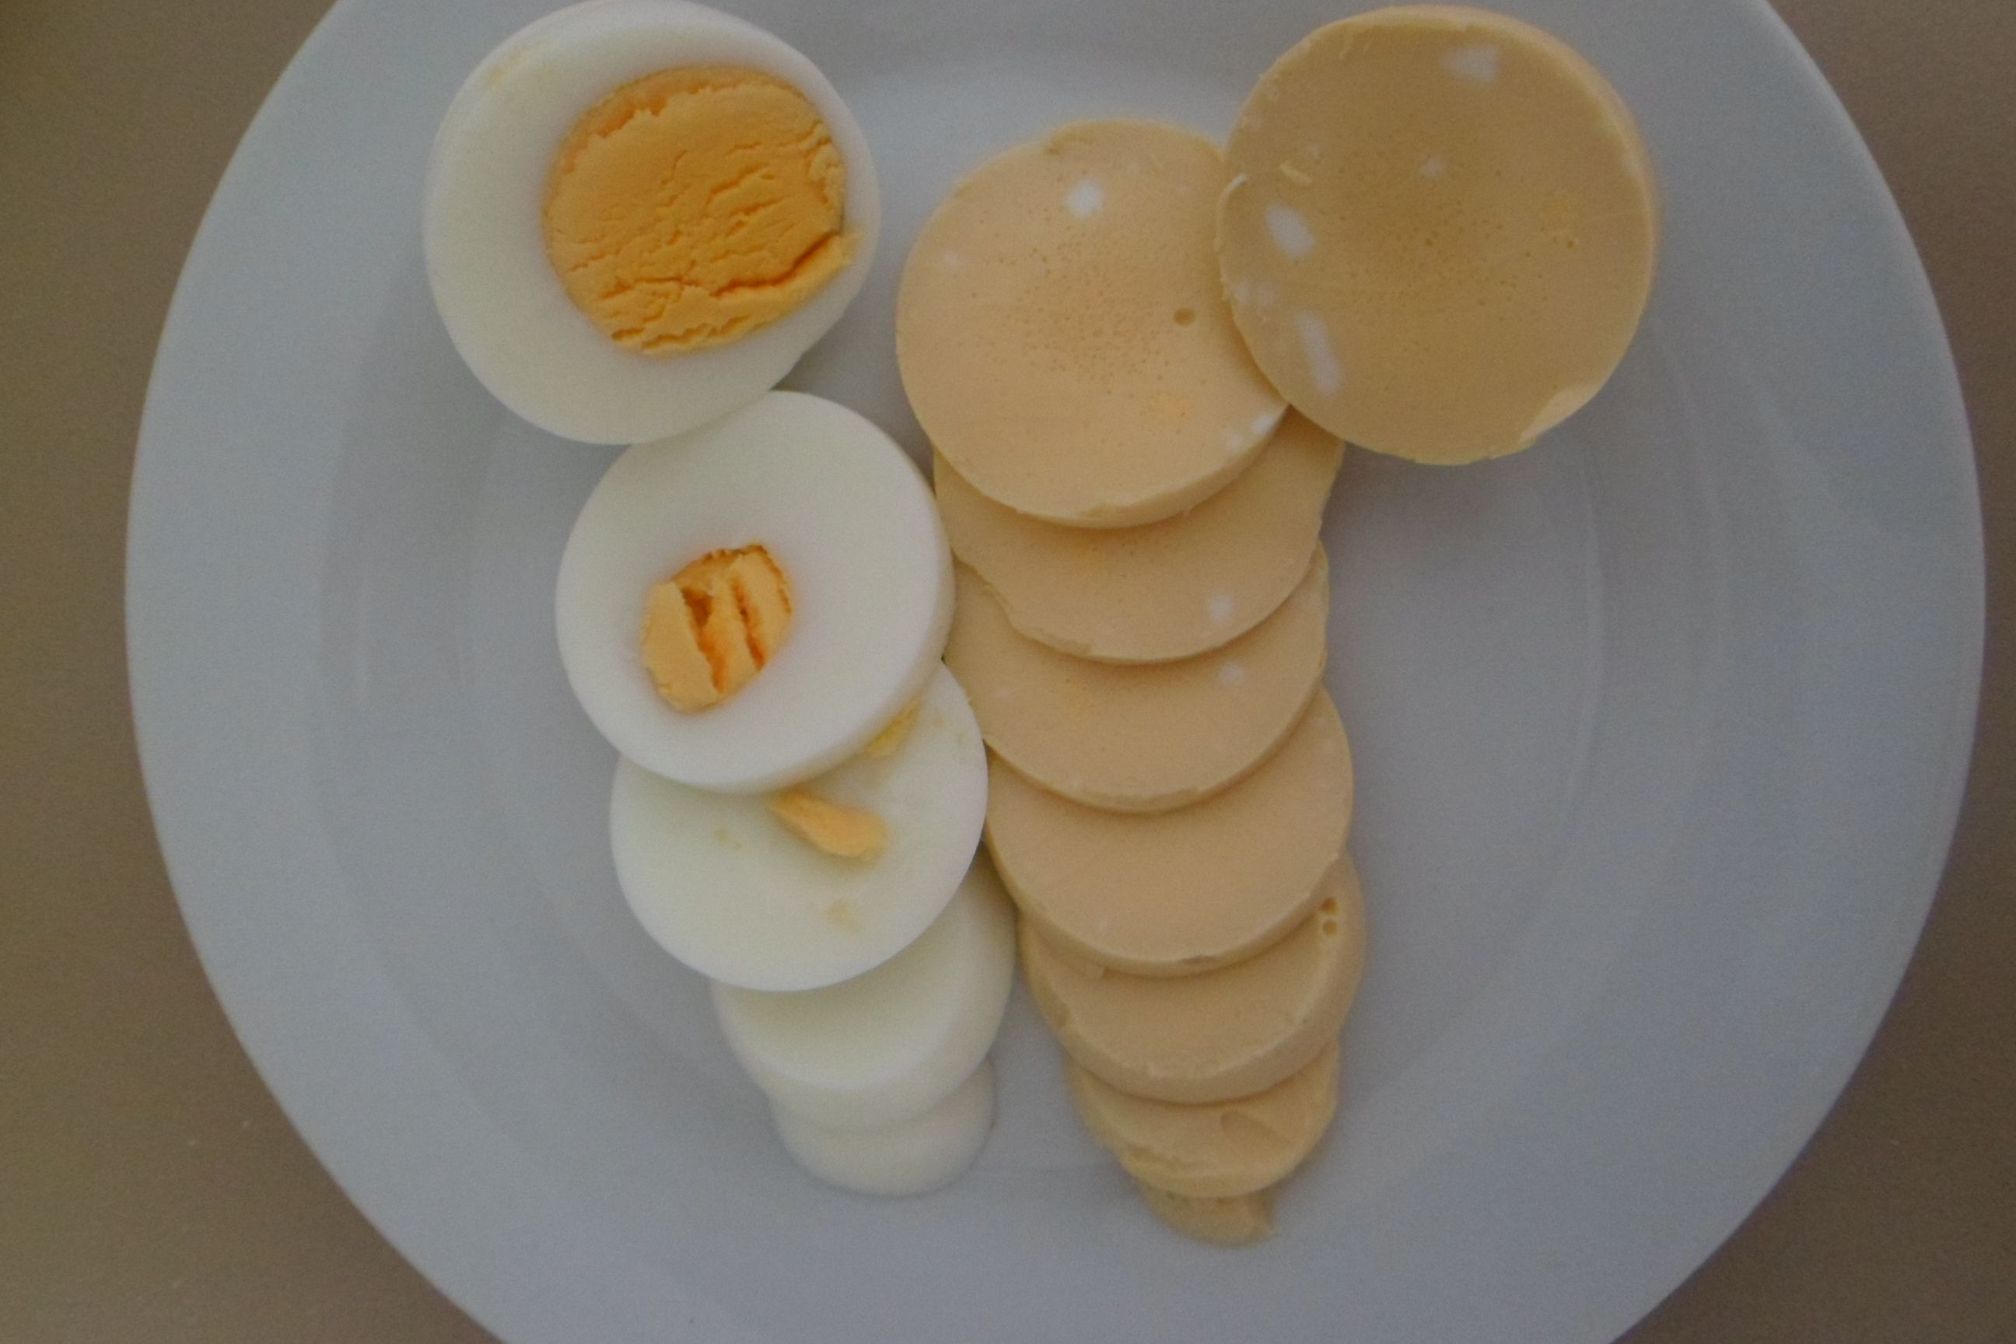 Best Golden Egg Recipe - How To Make Scrambled Hard Boiled Eggs